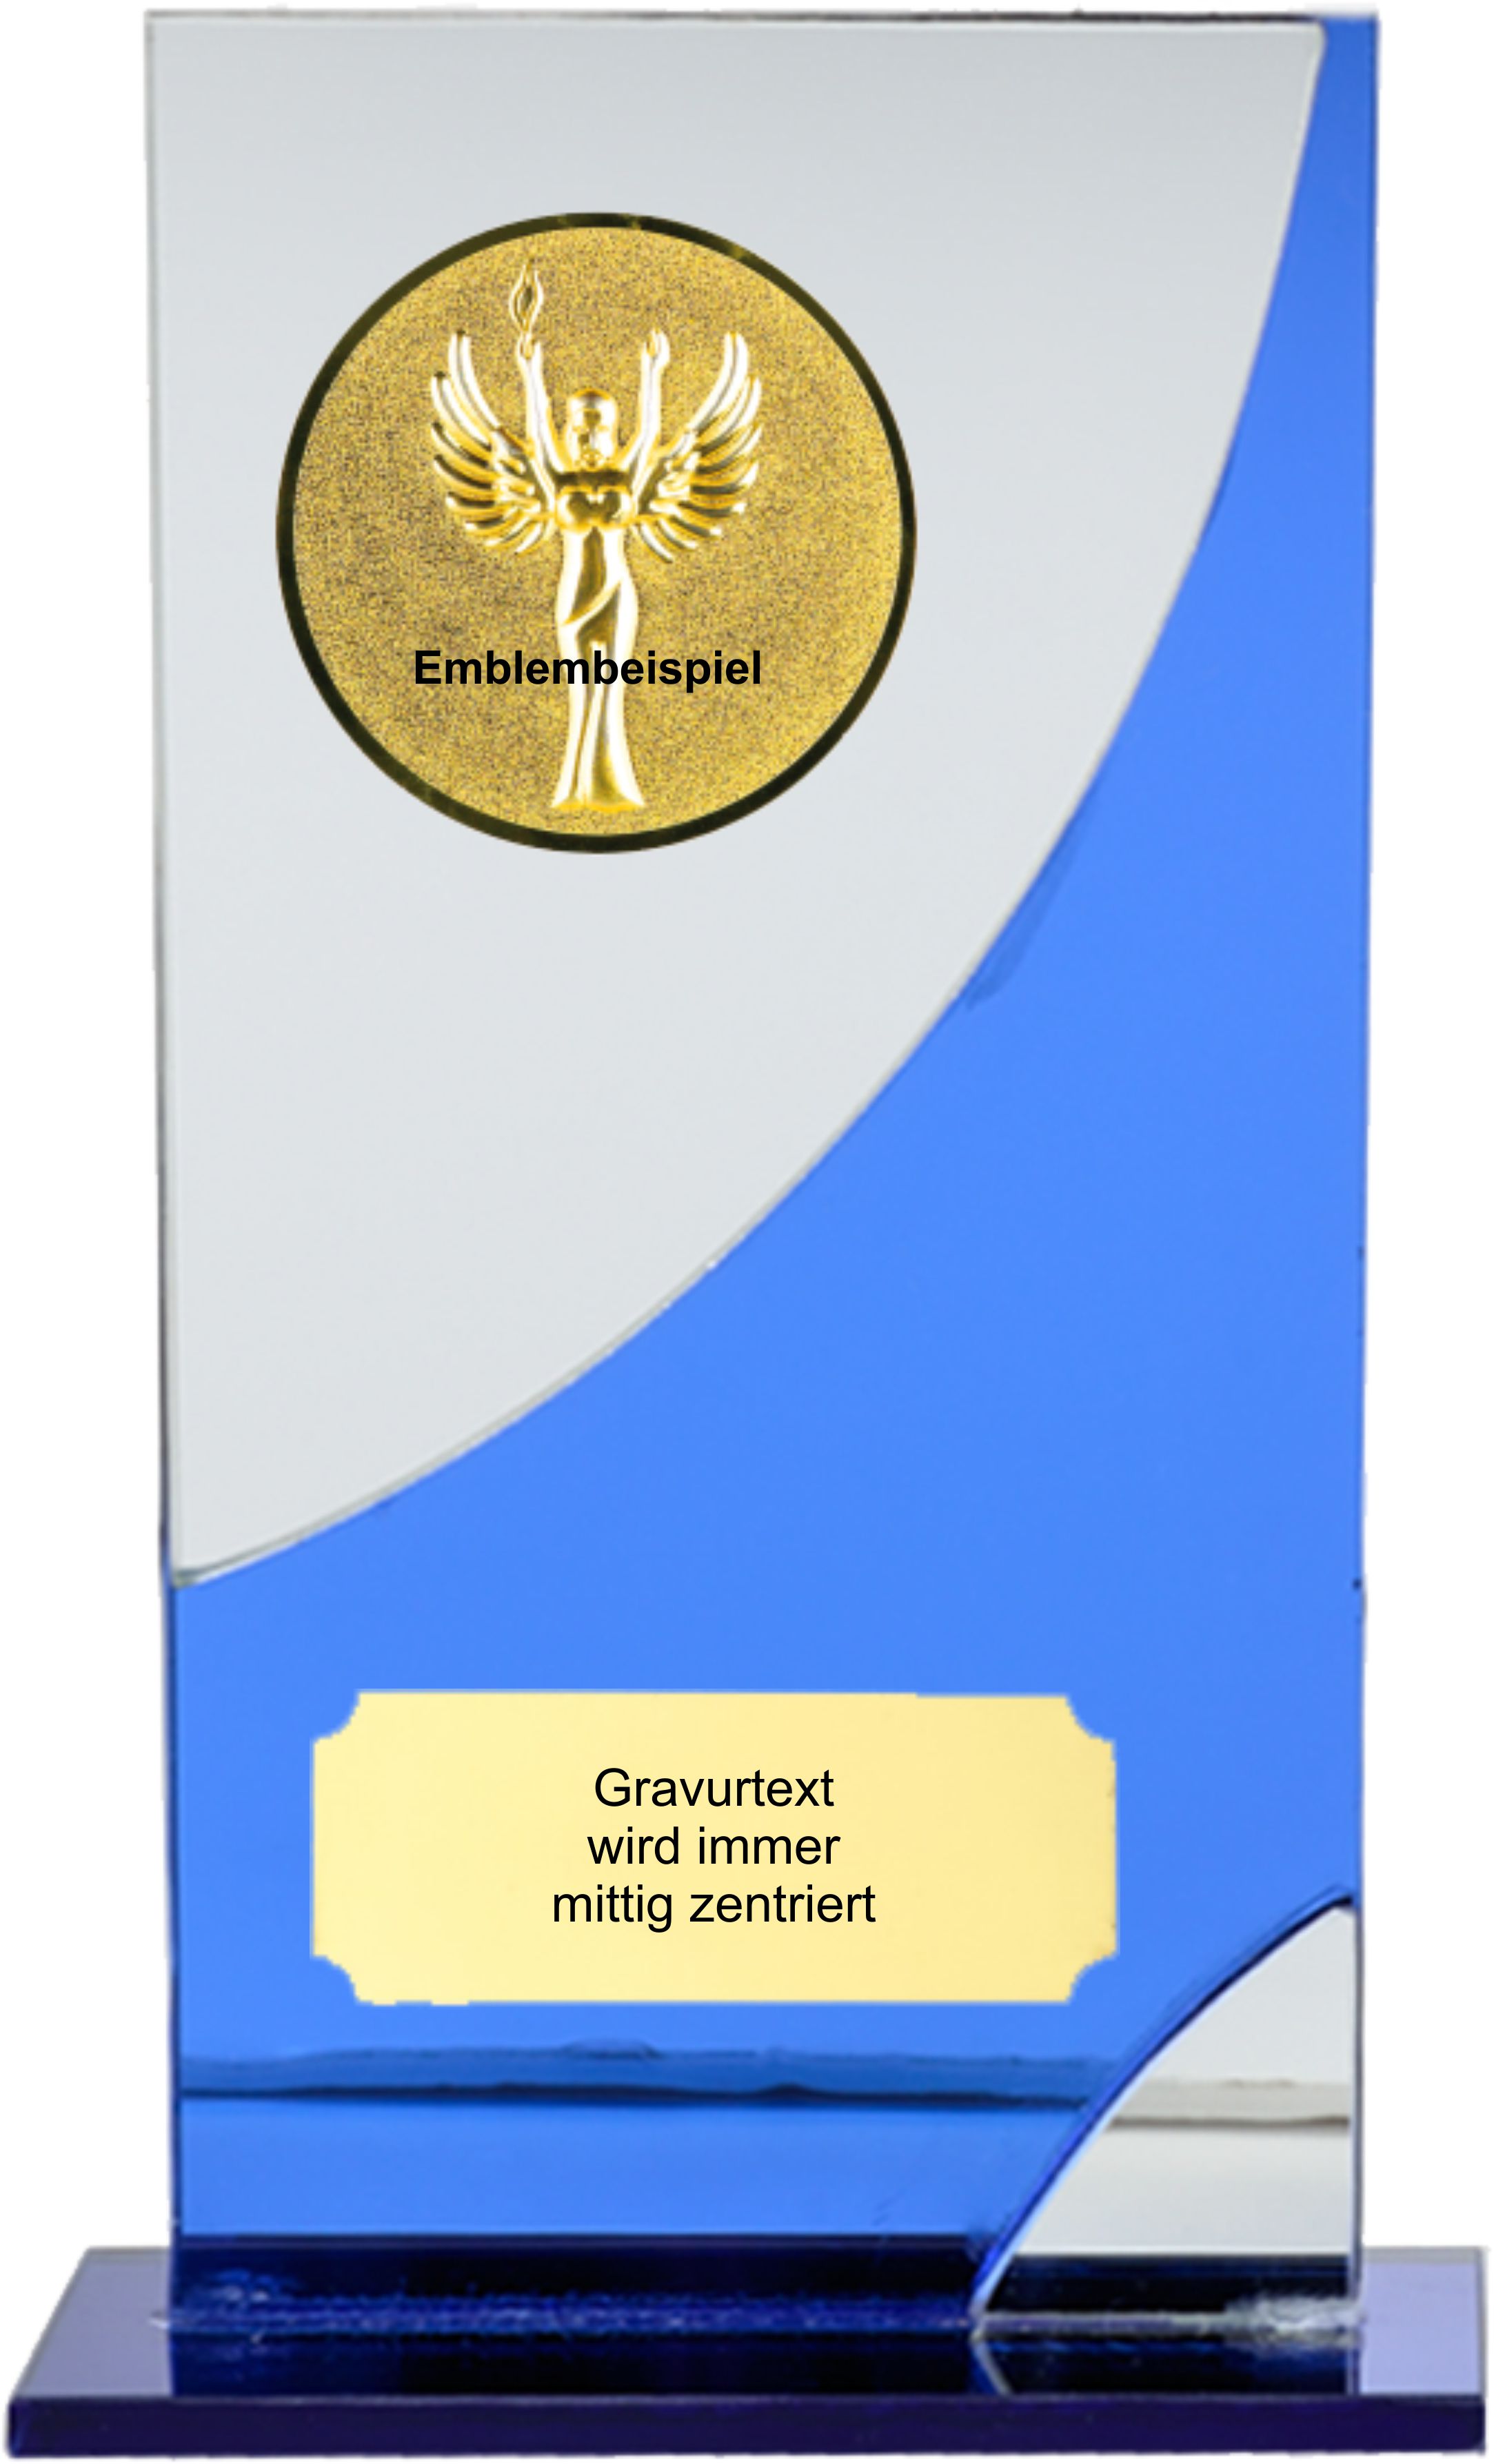 Spiegel-Glas-Pokal 147-35 inkl. Emblem und Gravur #1 20 cm 